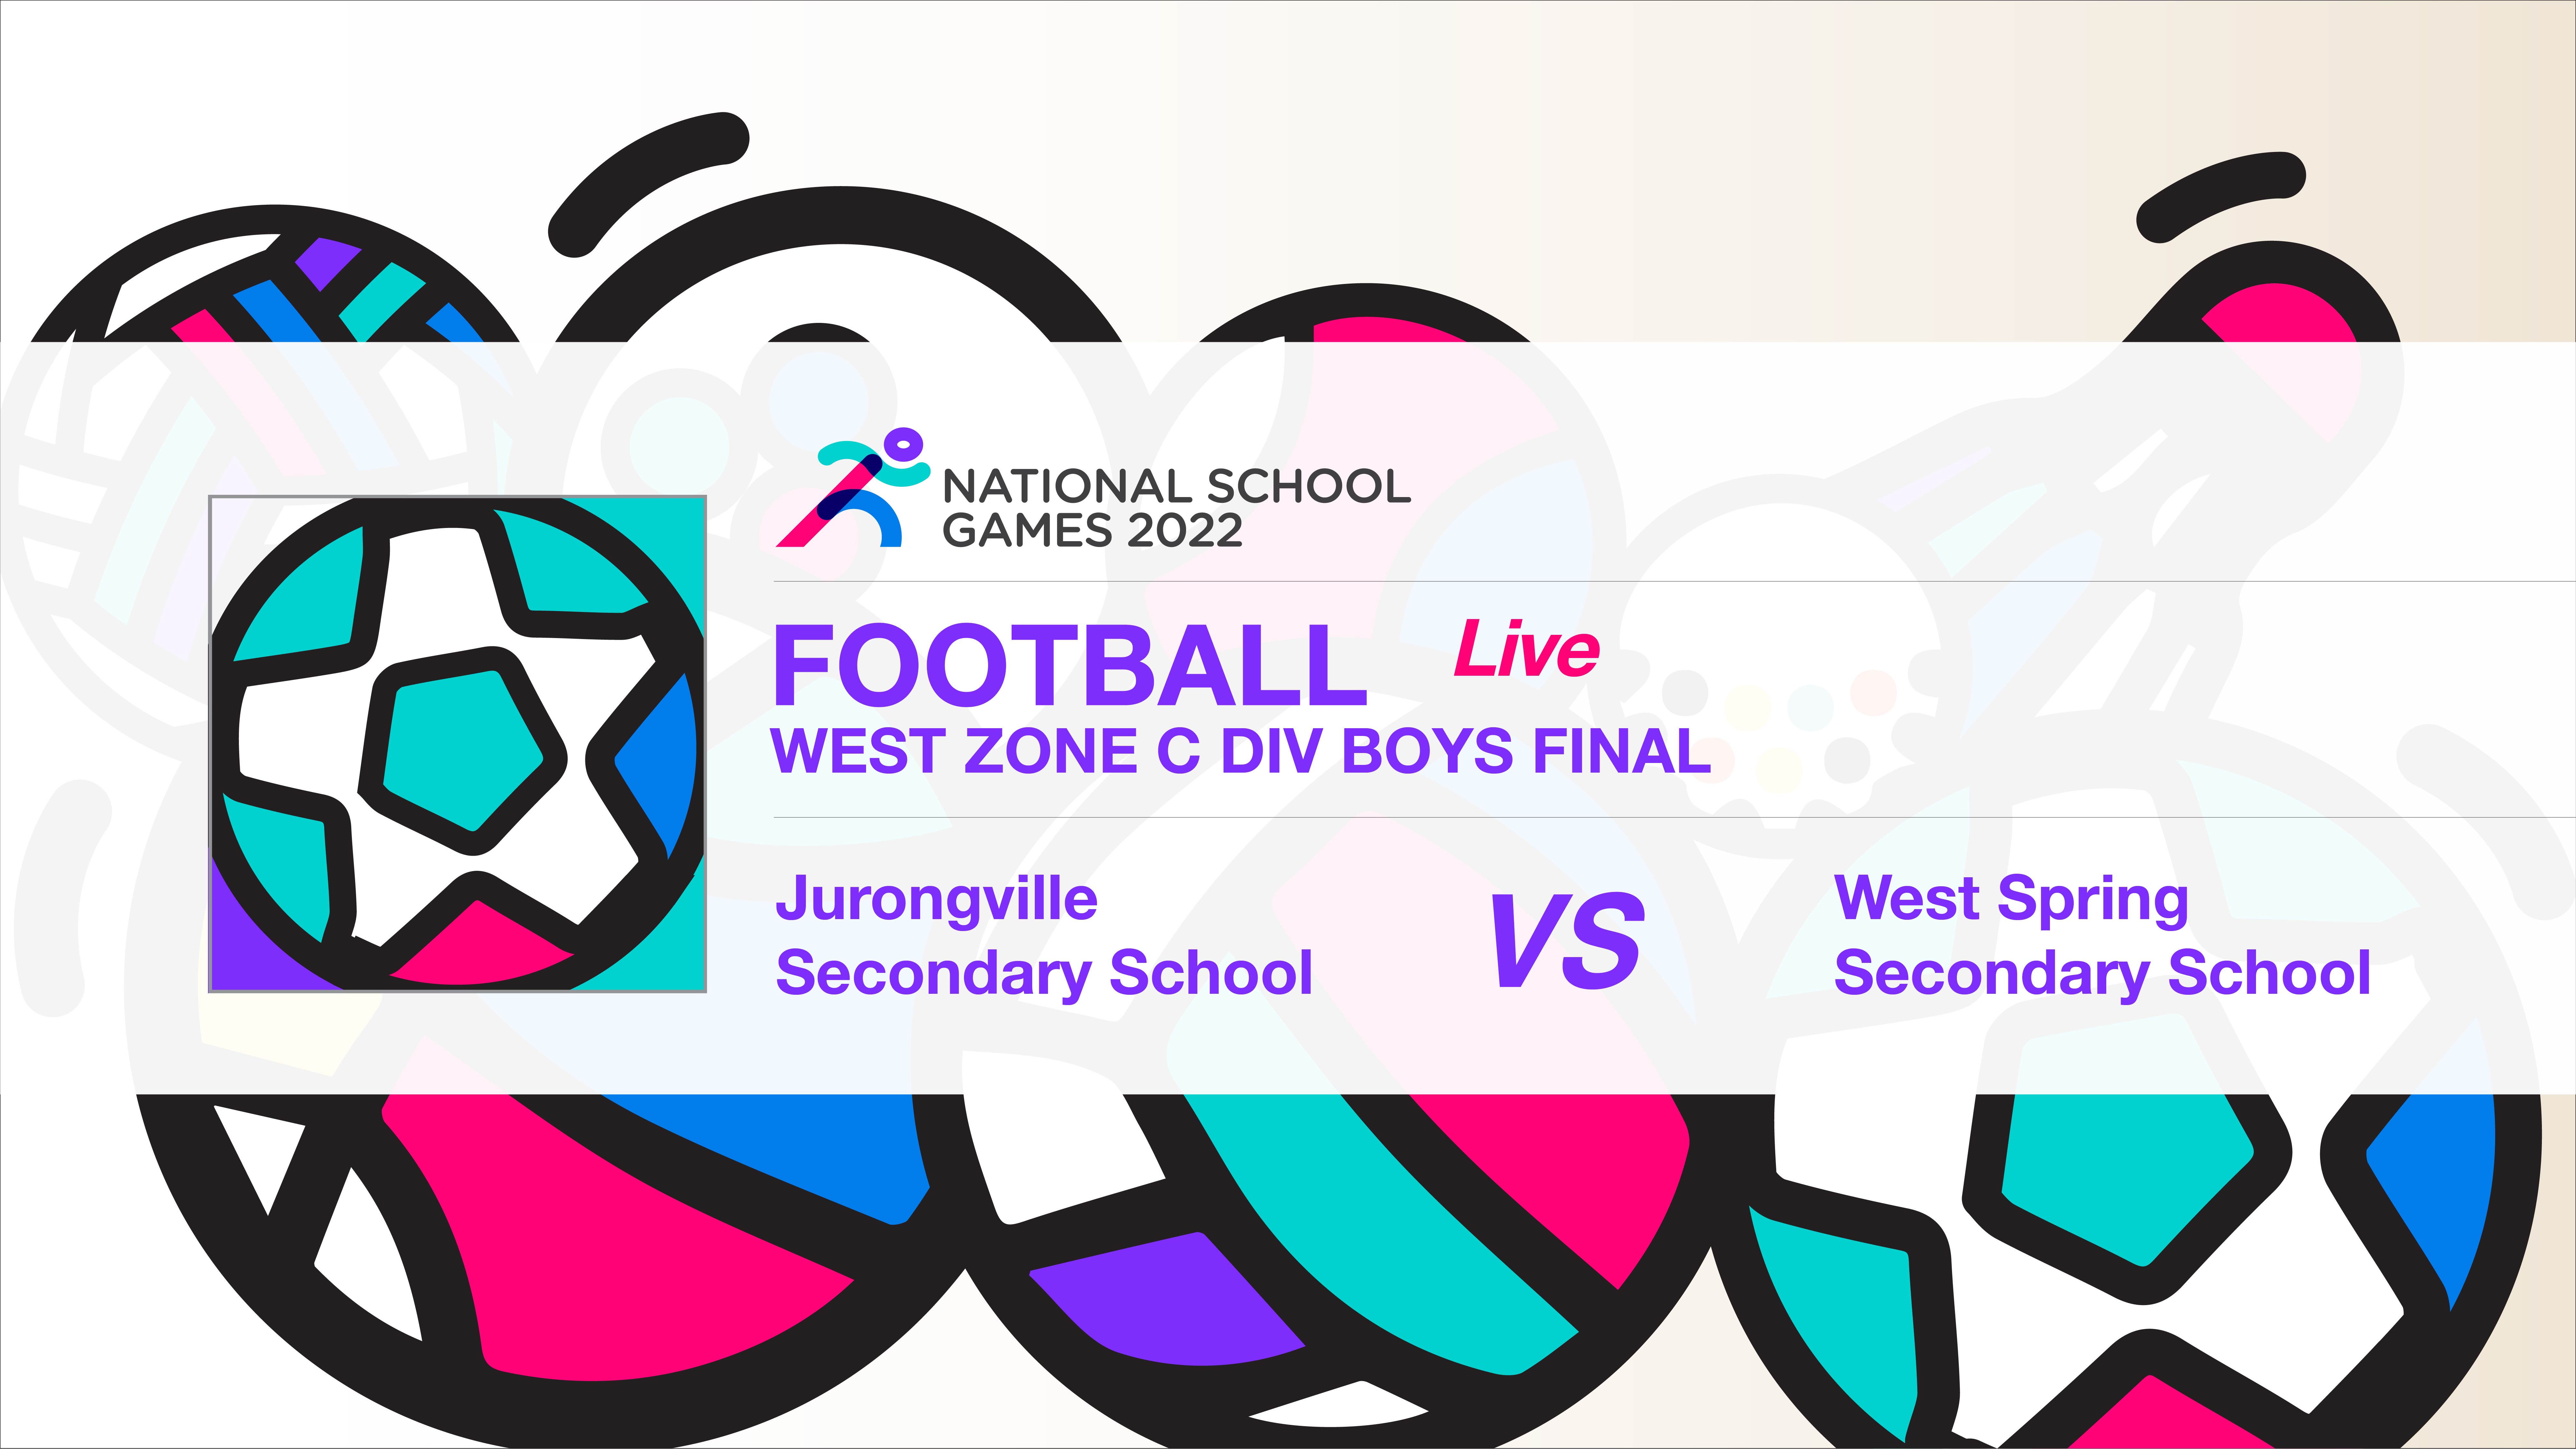 SSSC Football West Zone C Division Boys Final | Jurongville Secondary School vs West Spring Secondary School